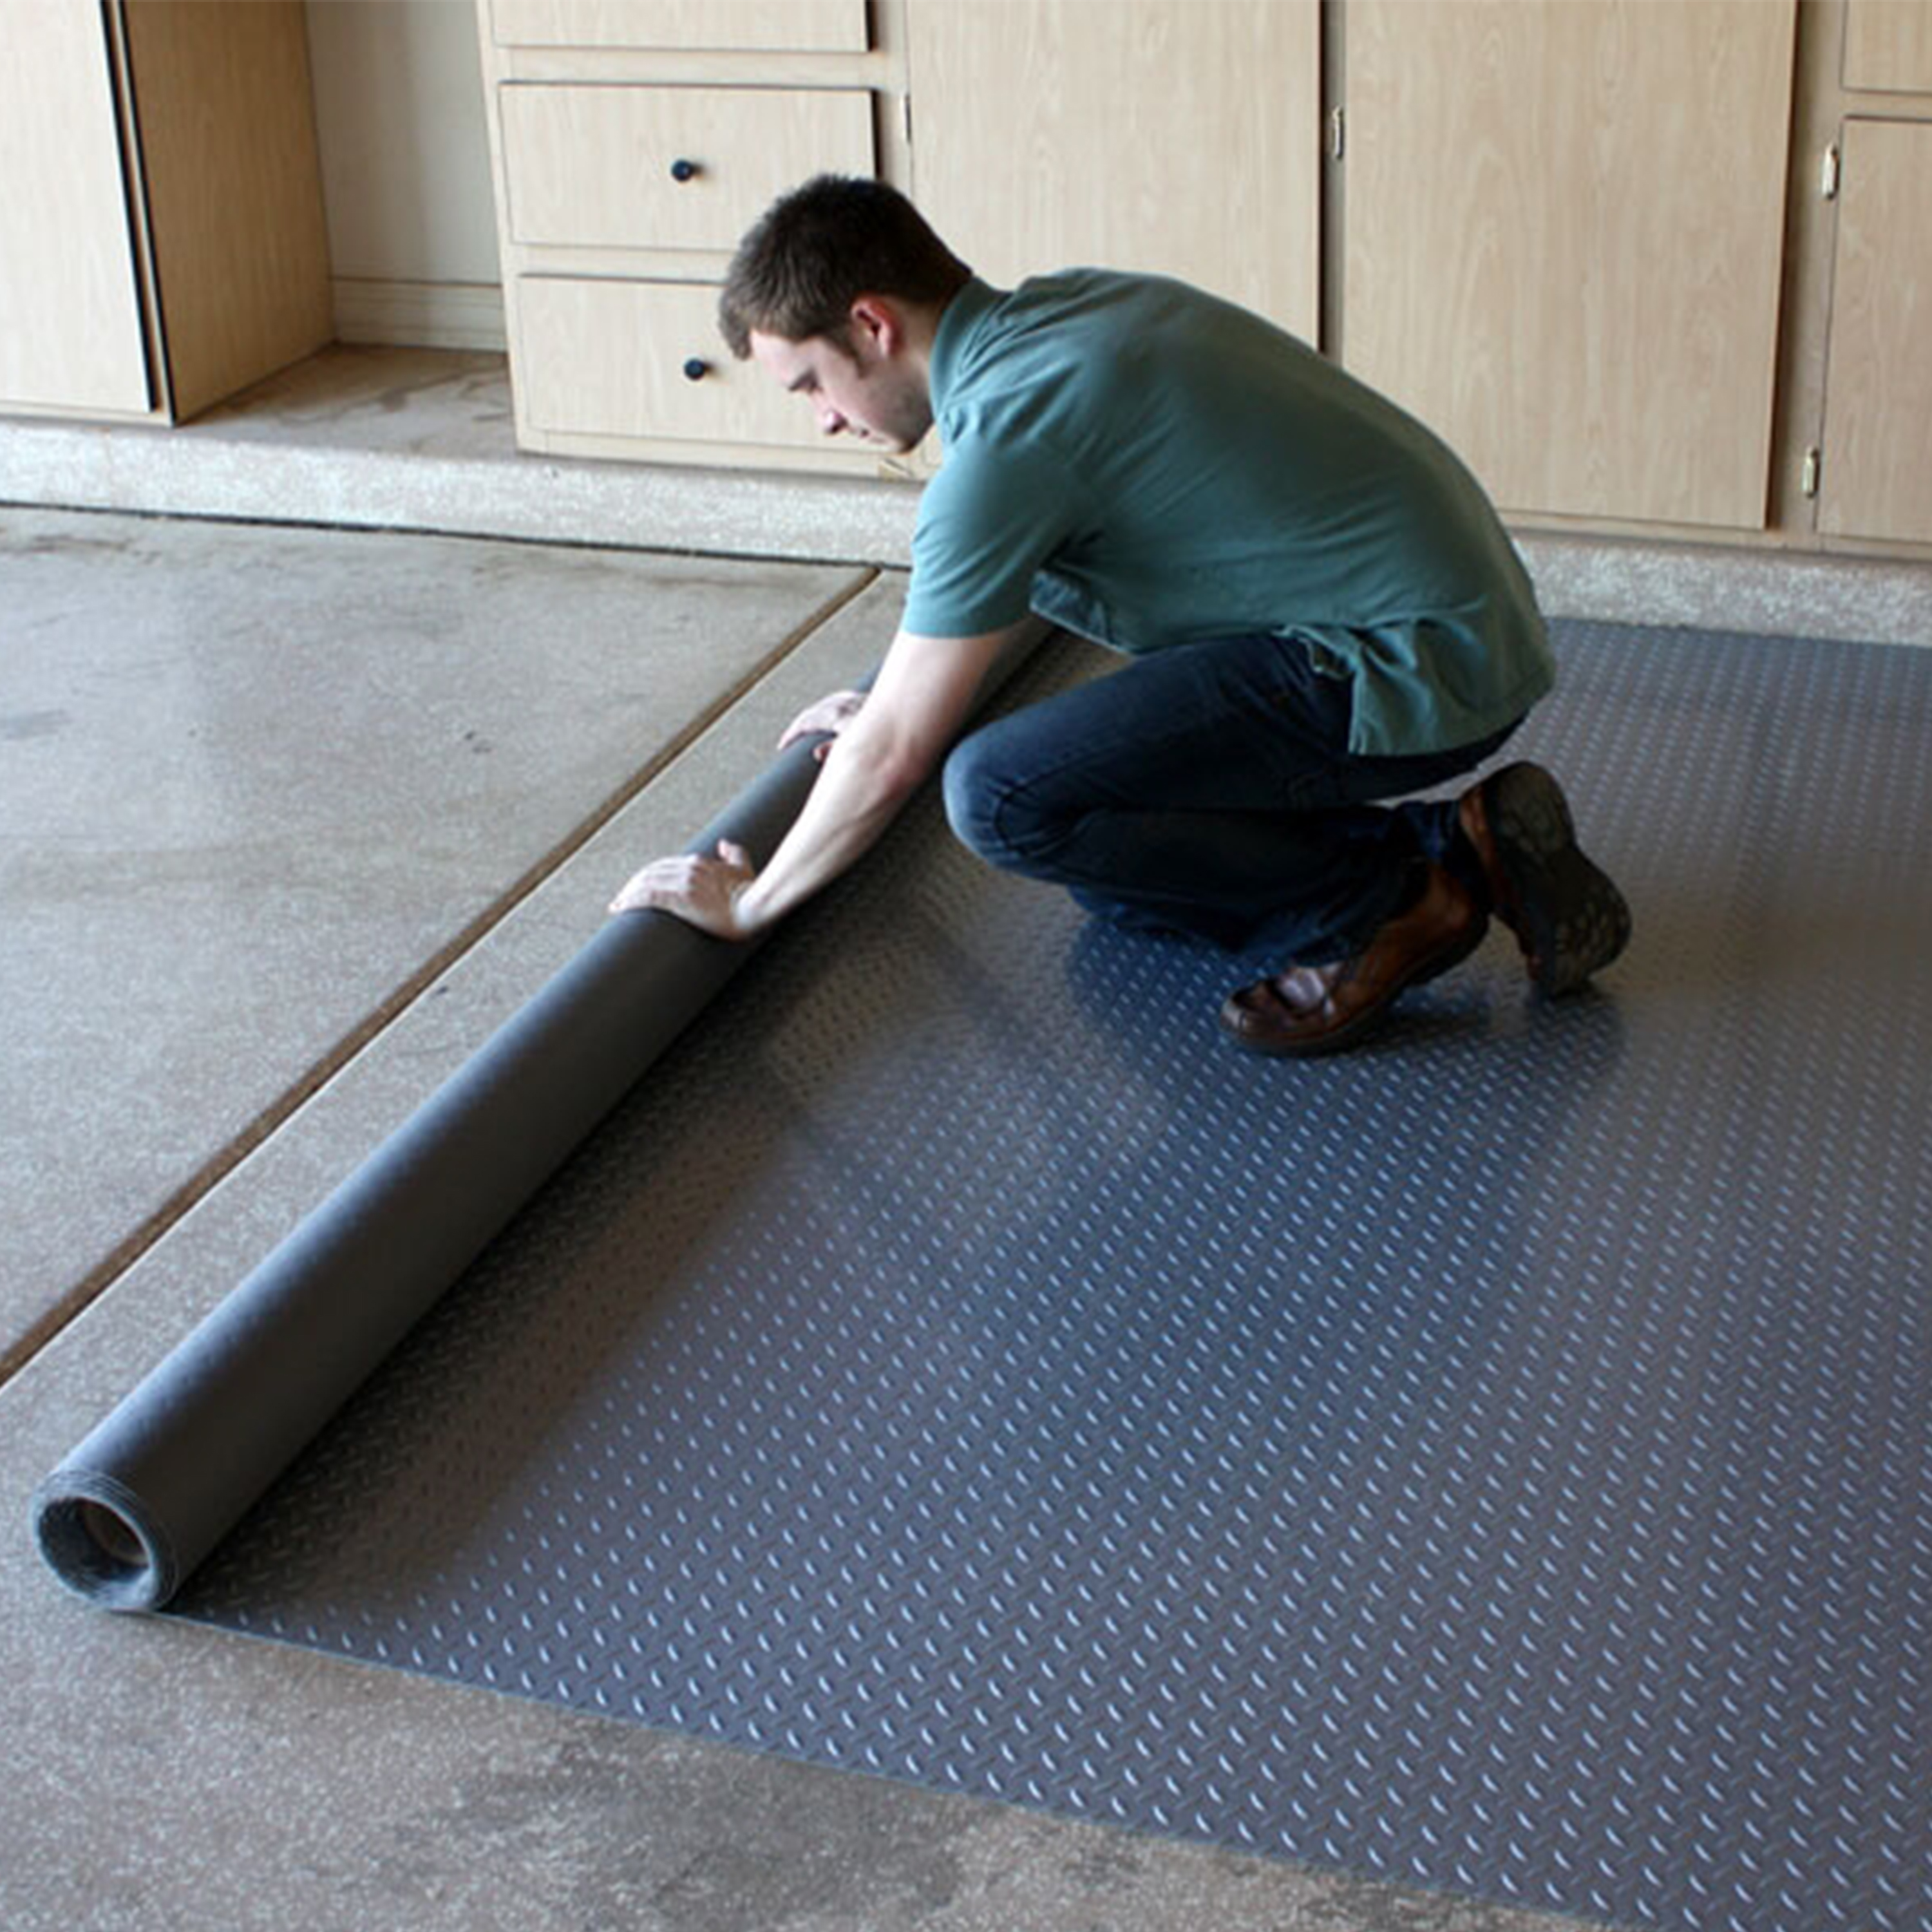 FlooringInc Standard Grade Nitro Garage Roll & Protective Parking Mats, Stailess Steel, Diamond, 5'x17' Flooring Materials - image 5 of 10